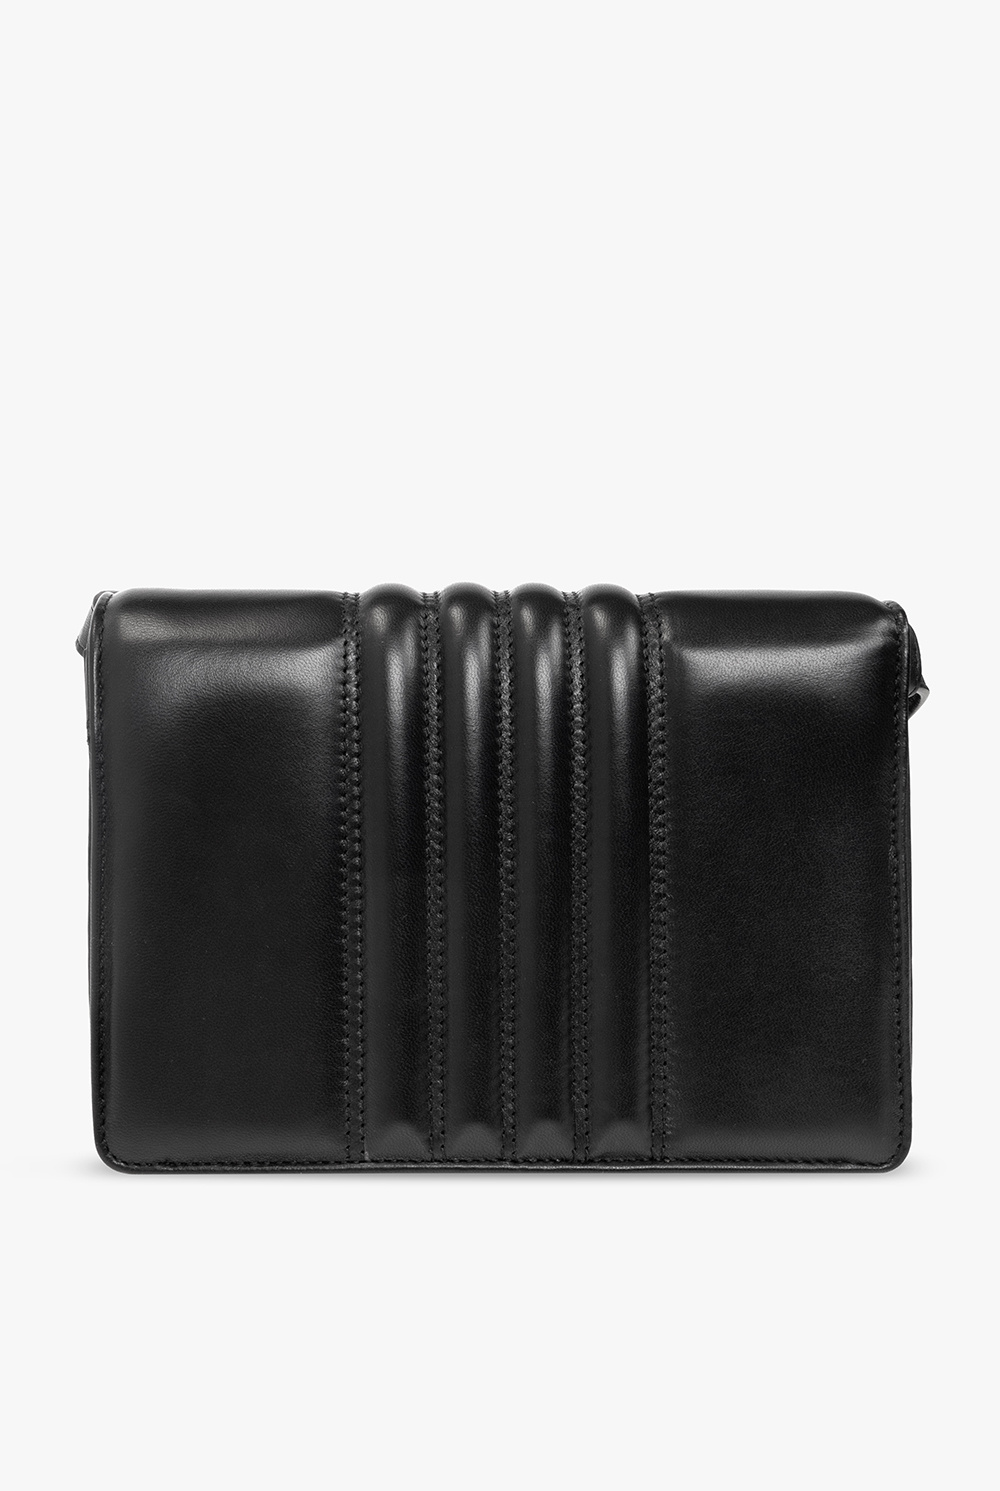 Alexander McQueen ‘Four Ring’ shoulder bag